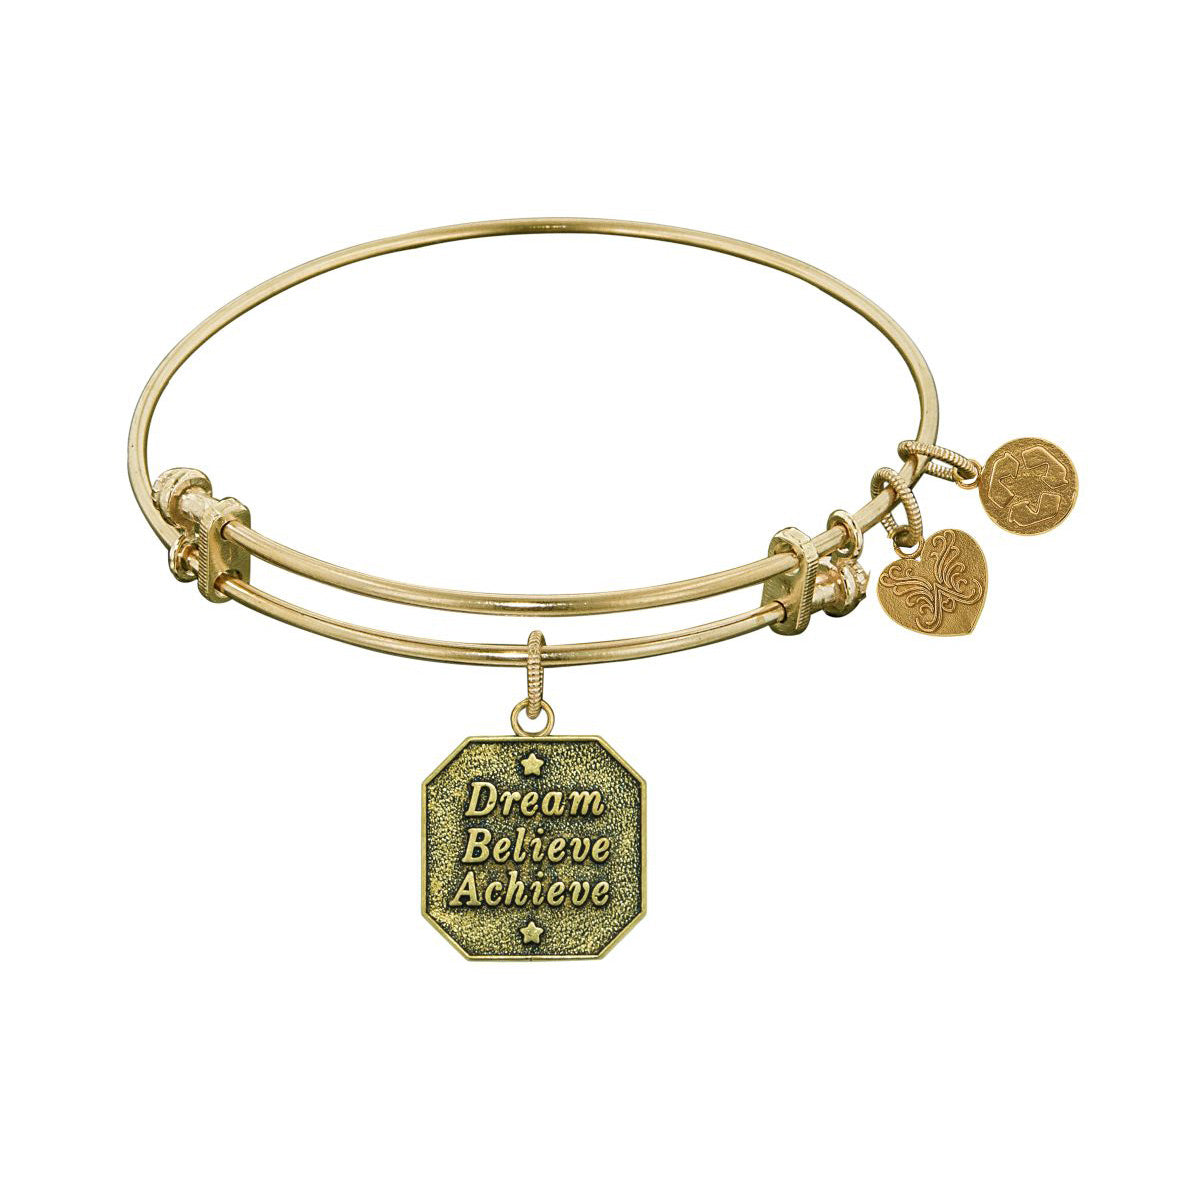 Stipple Finish Brass Dream, Believe, Achieve Angelica Bangle Bracelet, 7.25" fine designer jewelry for men and women